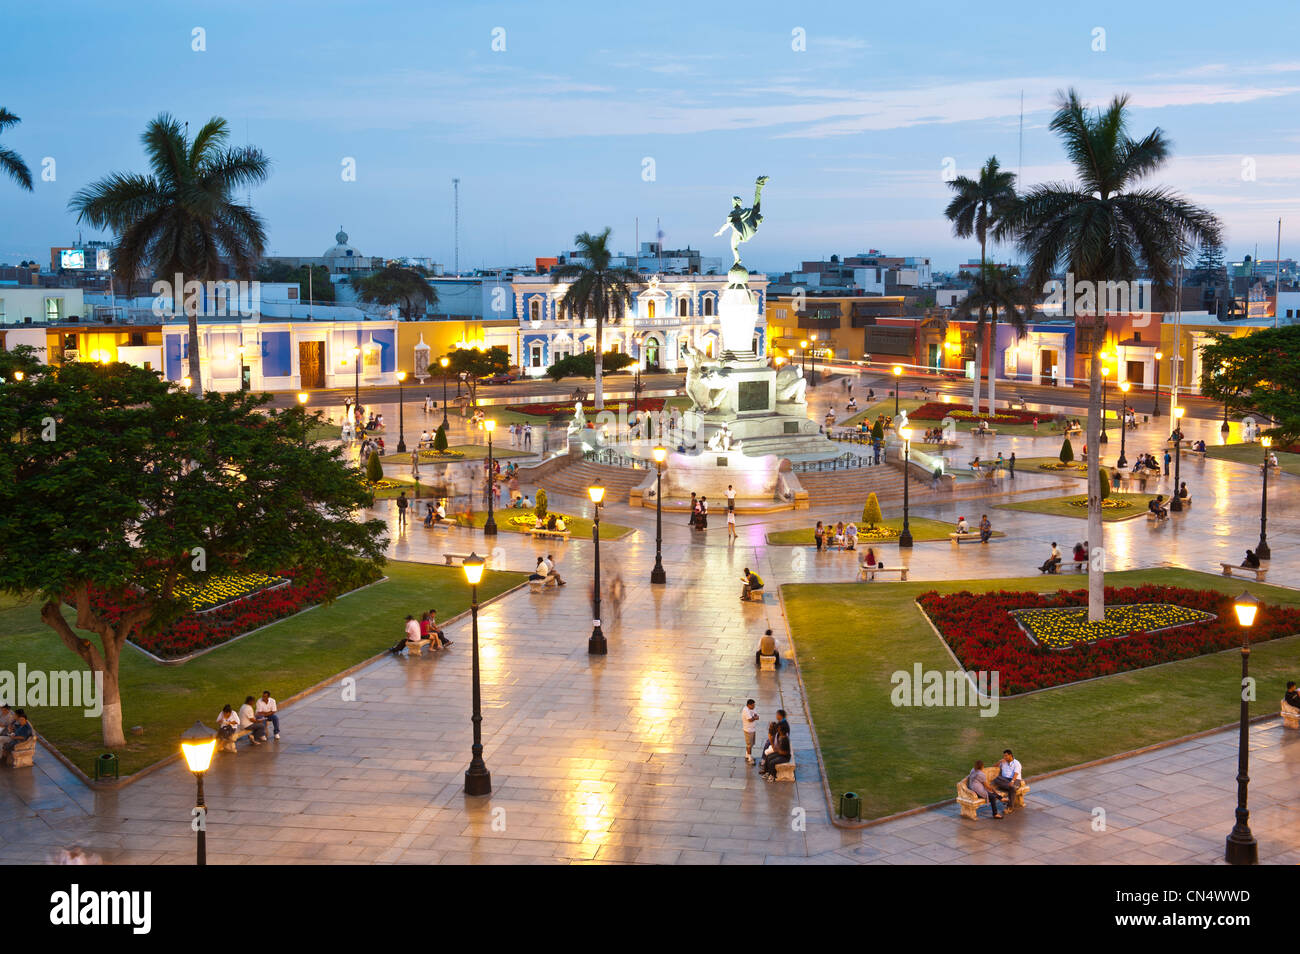 Peru, La Libertad province, north coast, Trujillo, Plaza de Armas, illuminated Stock Photo